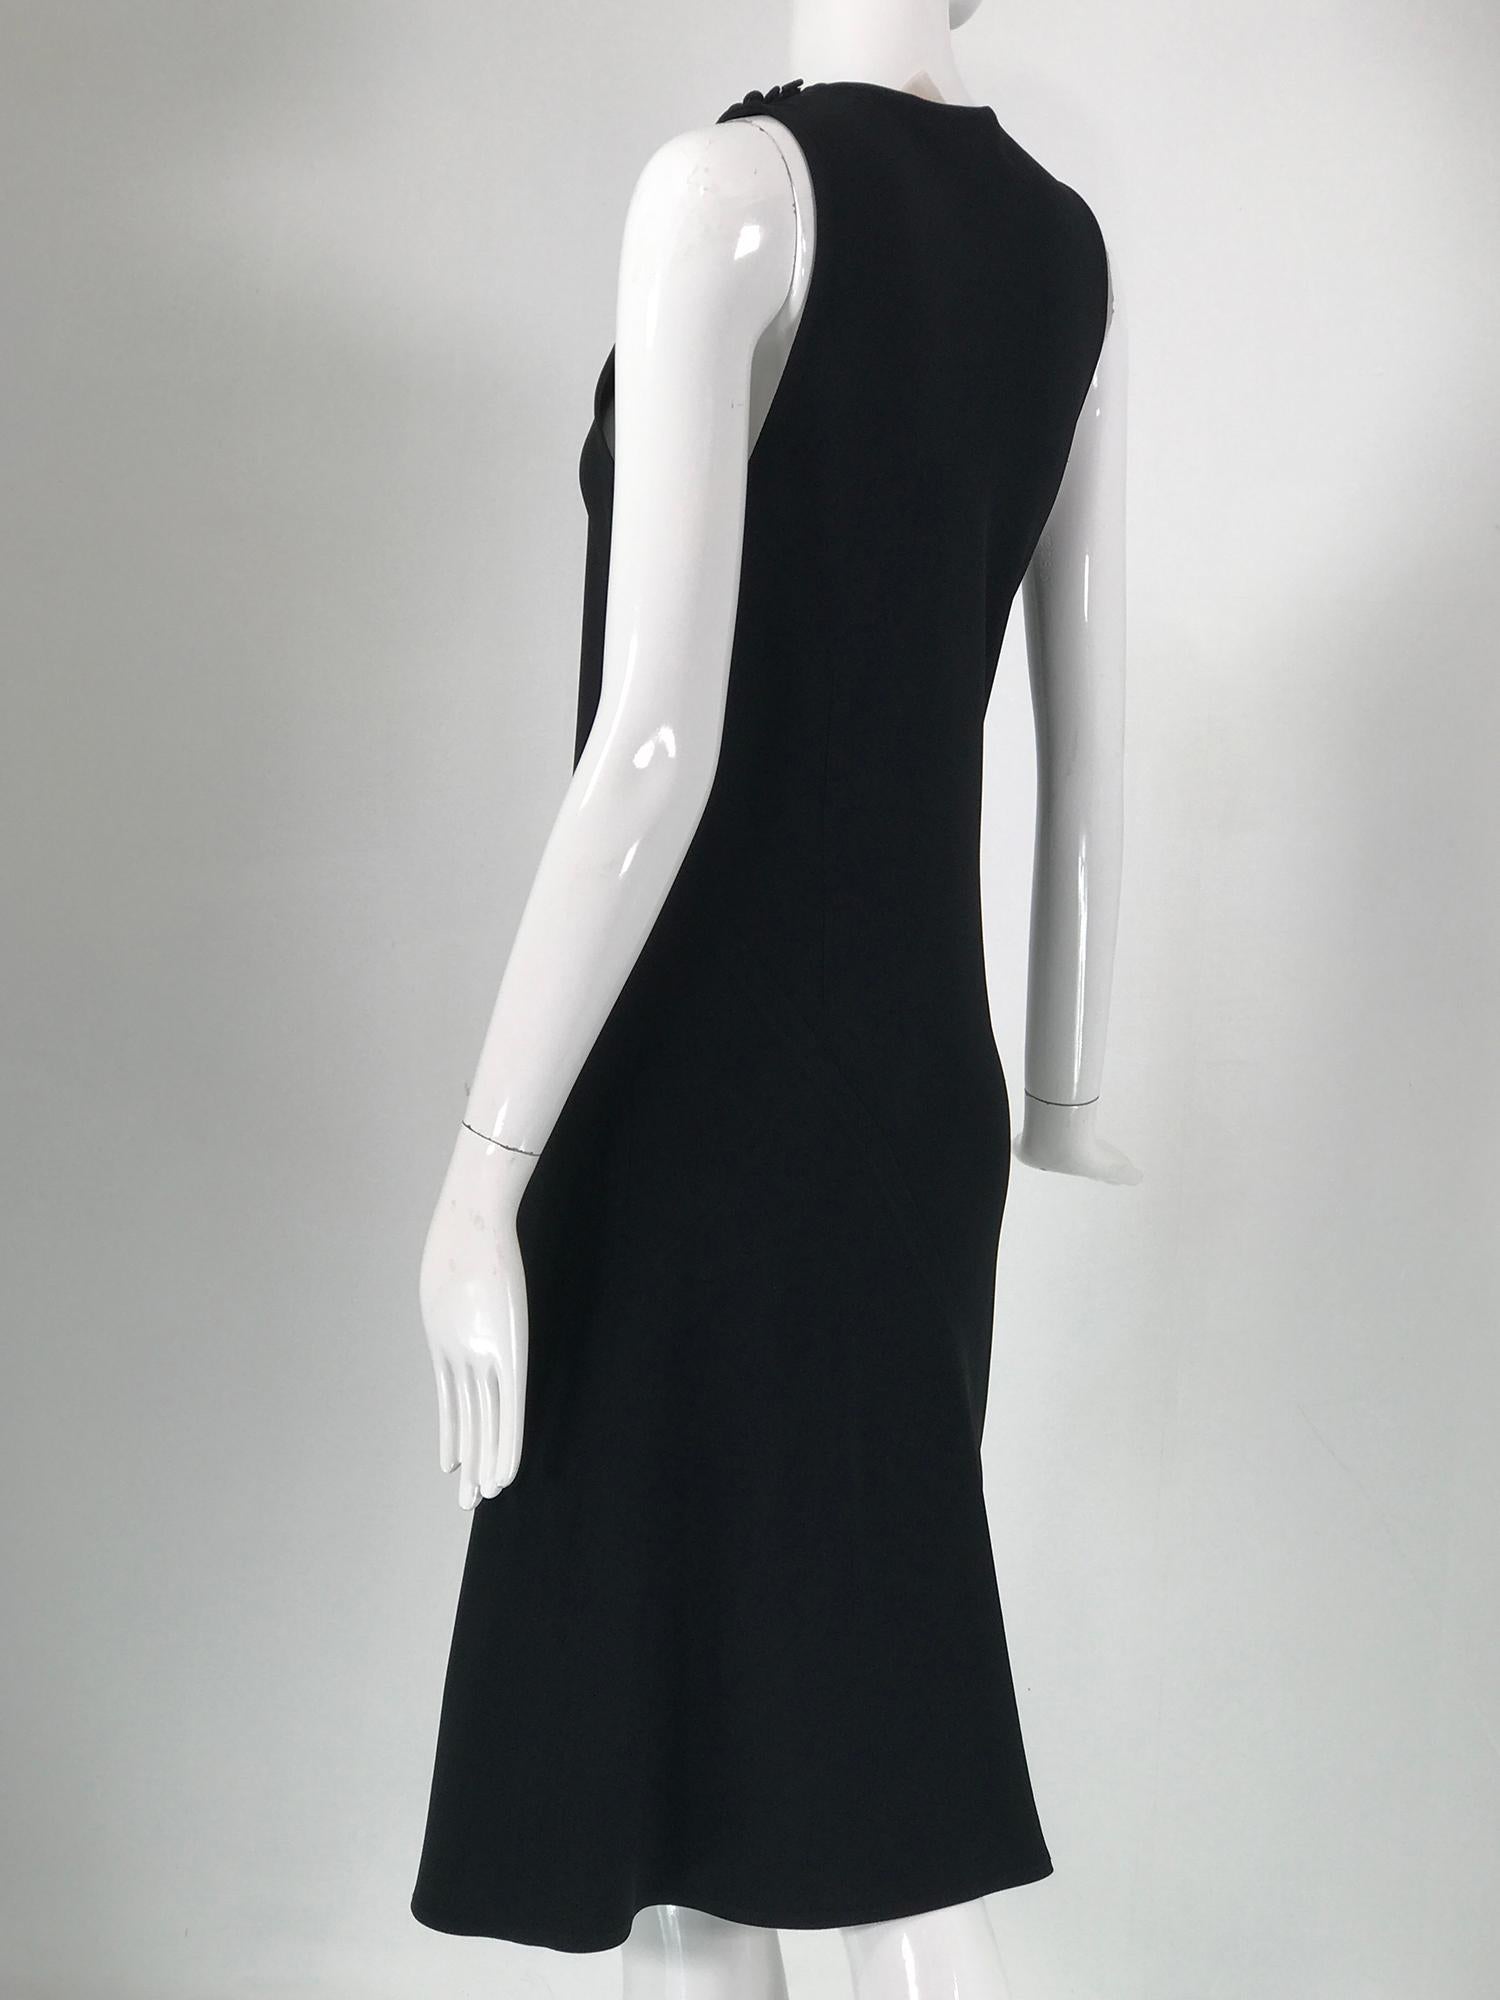 Sonia Rykiel Black Satin Backed Crepe Bias Cut Sleeveless Dress  2